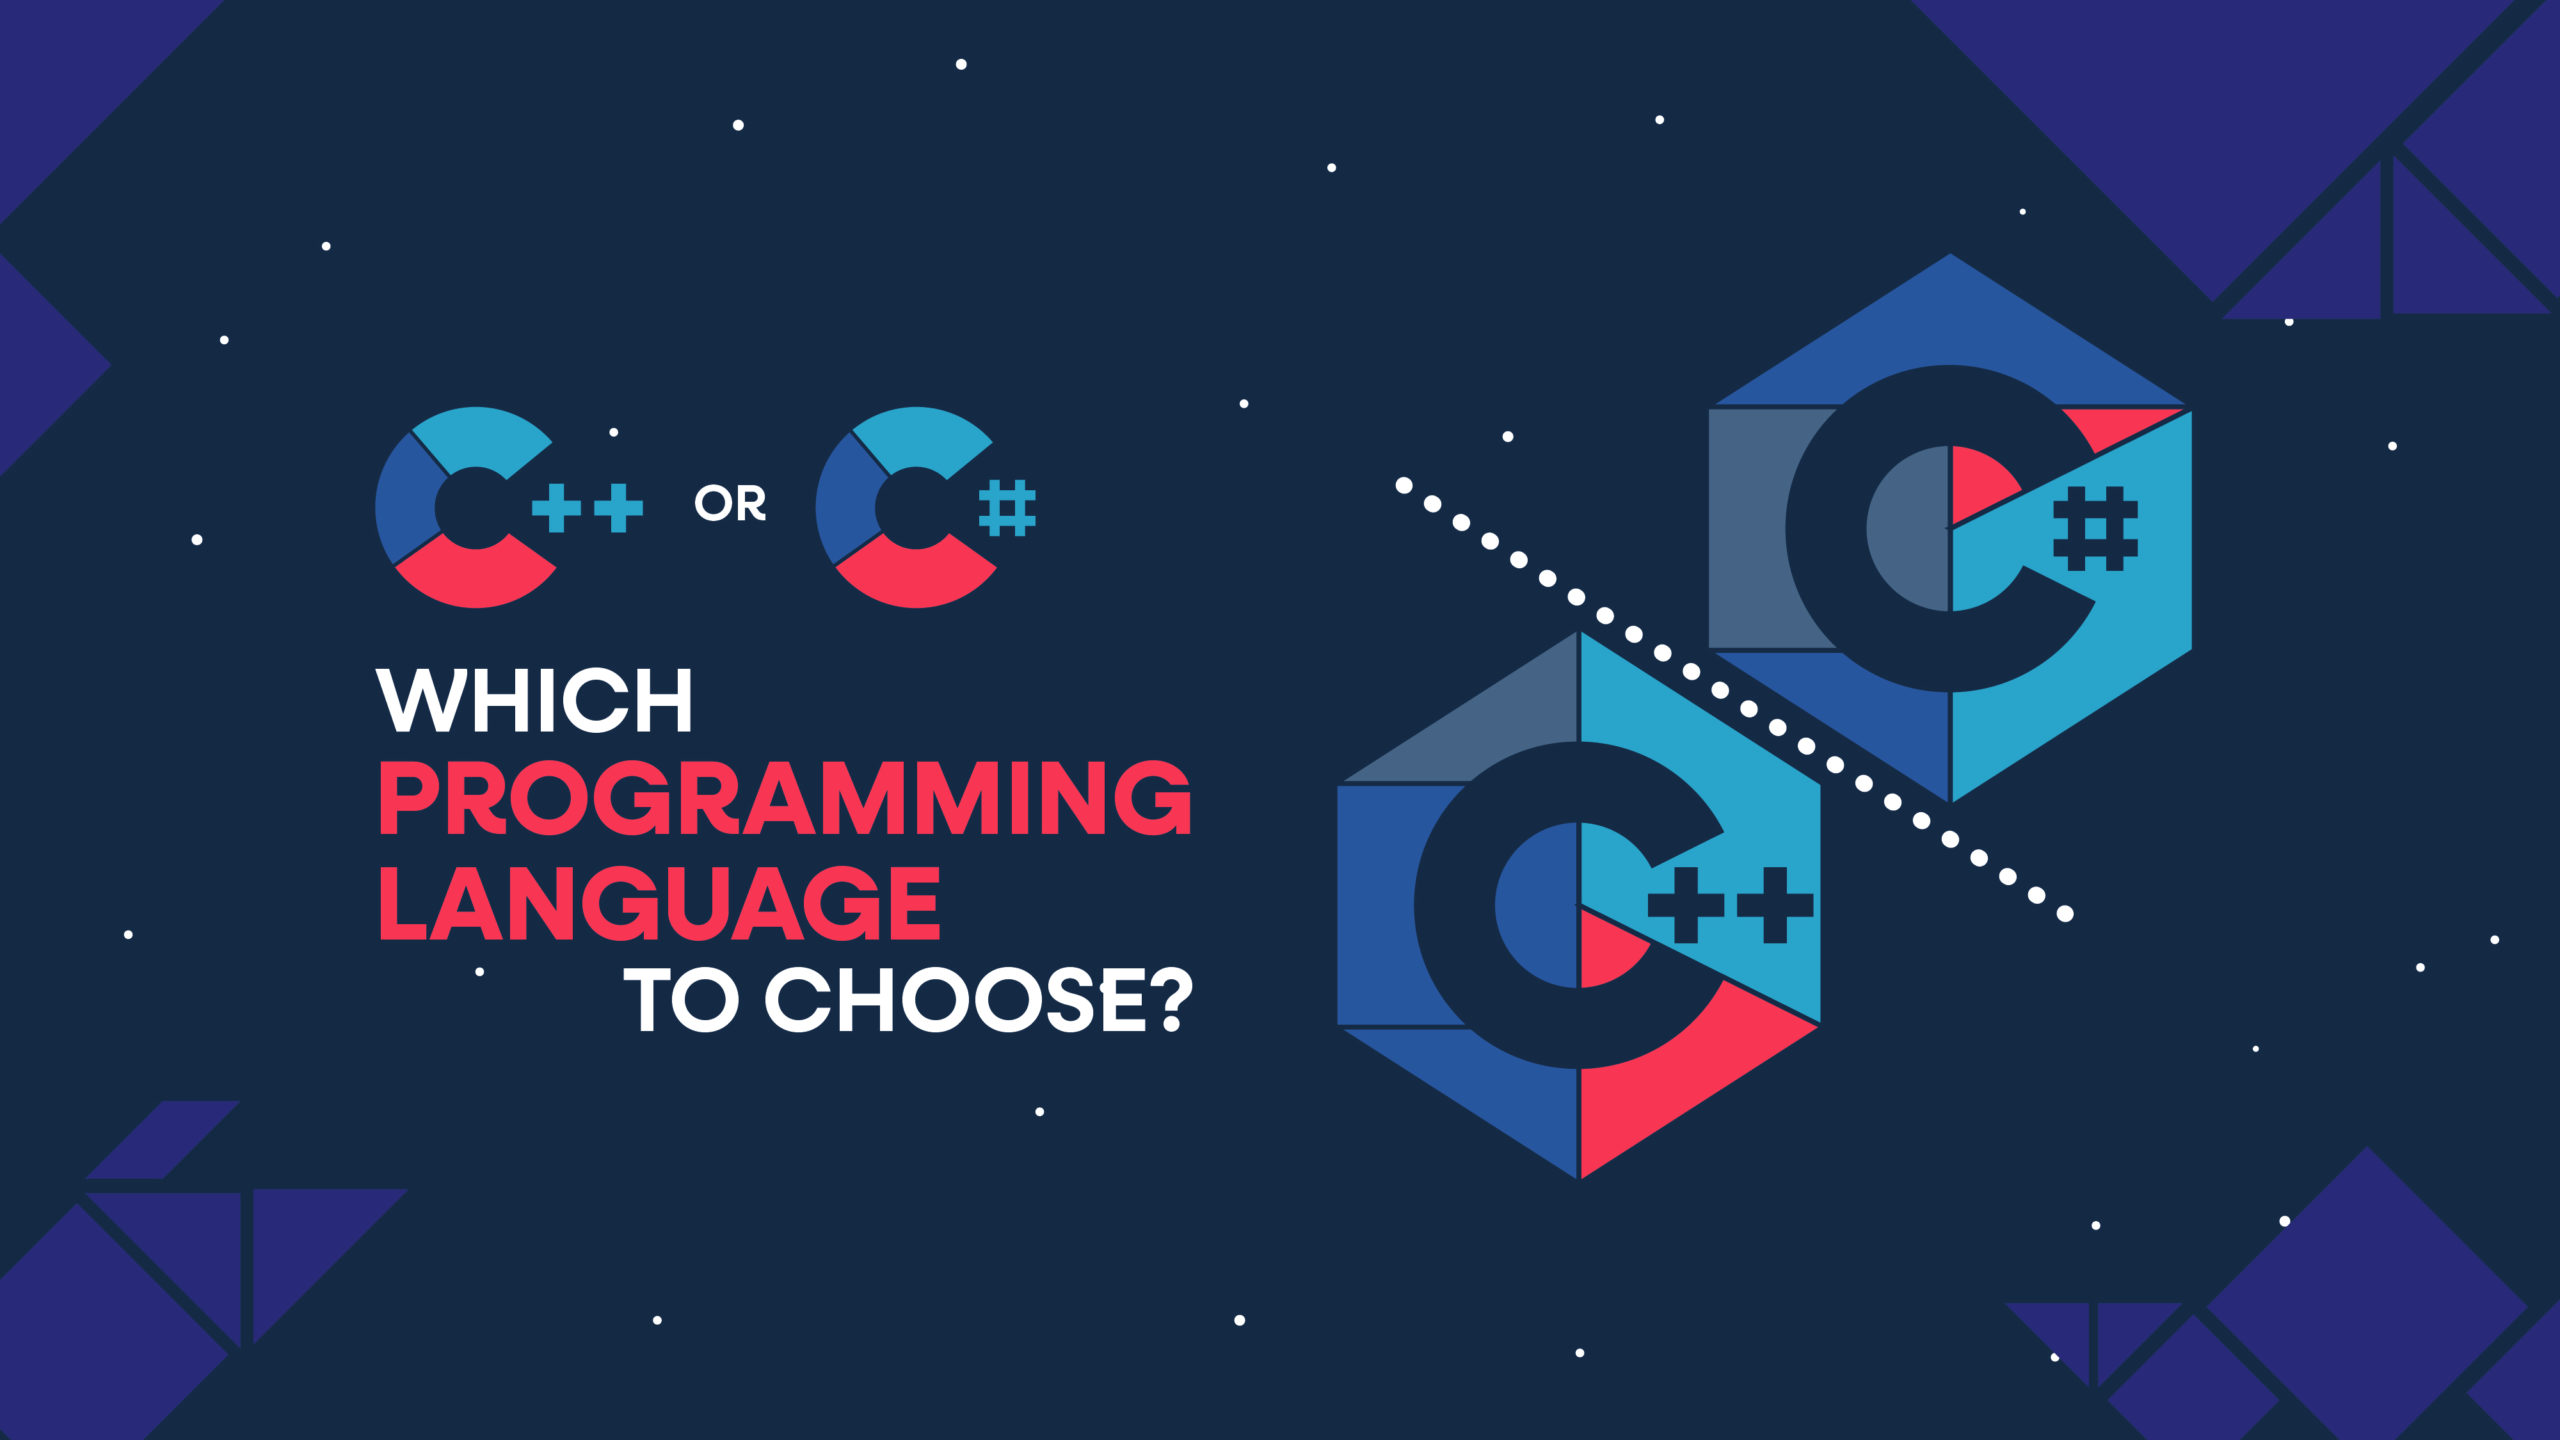 C++ vs C#? Which Programming Language to Choose?